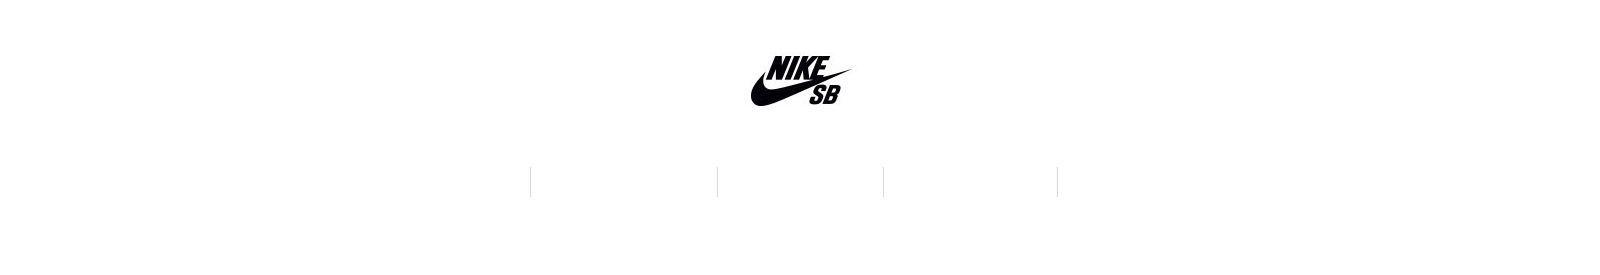 Nike Skateboarding Logo - Nike SB. Inside Nike Skateboarding. Nike.com (AU)